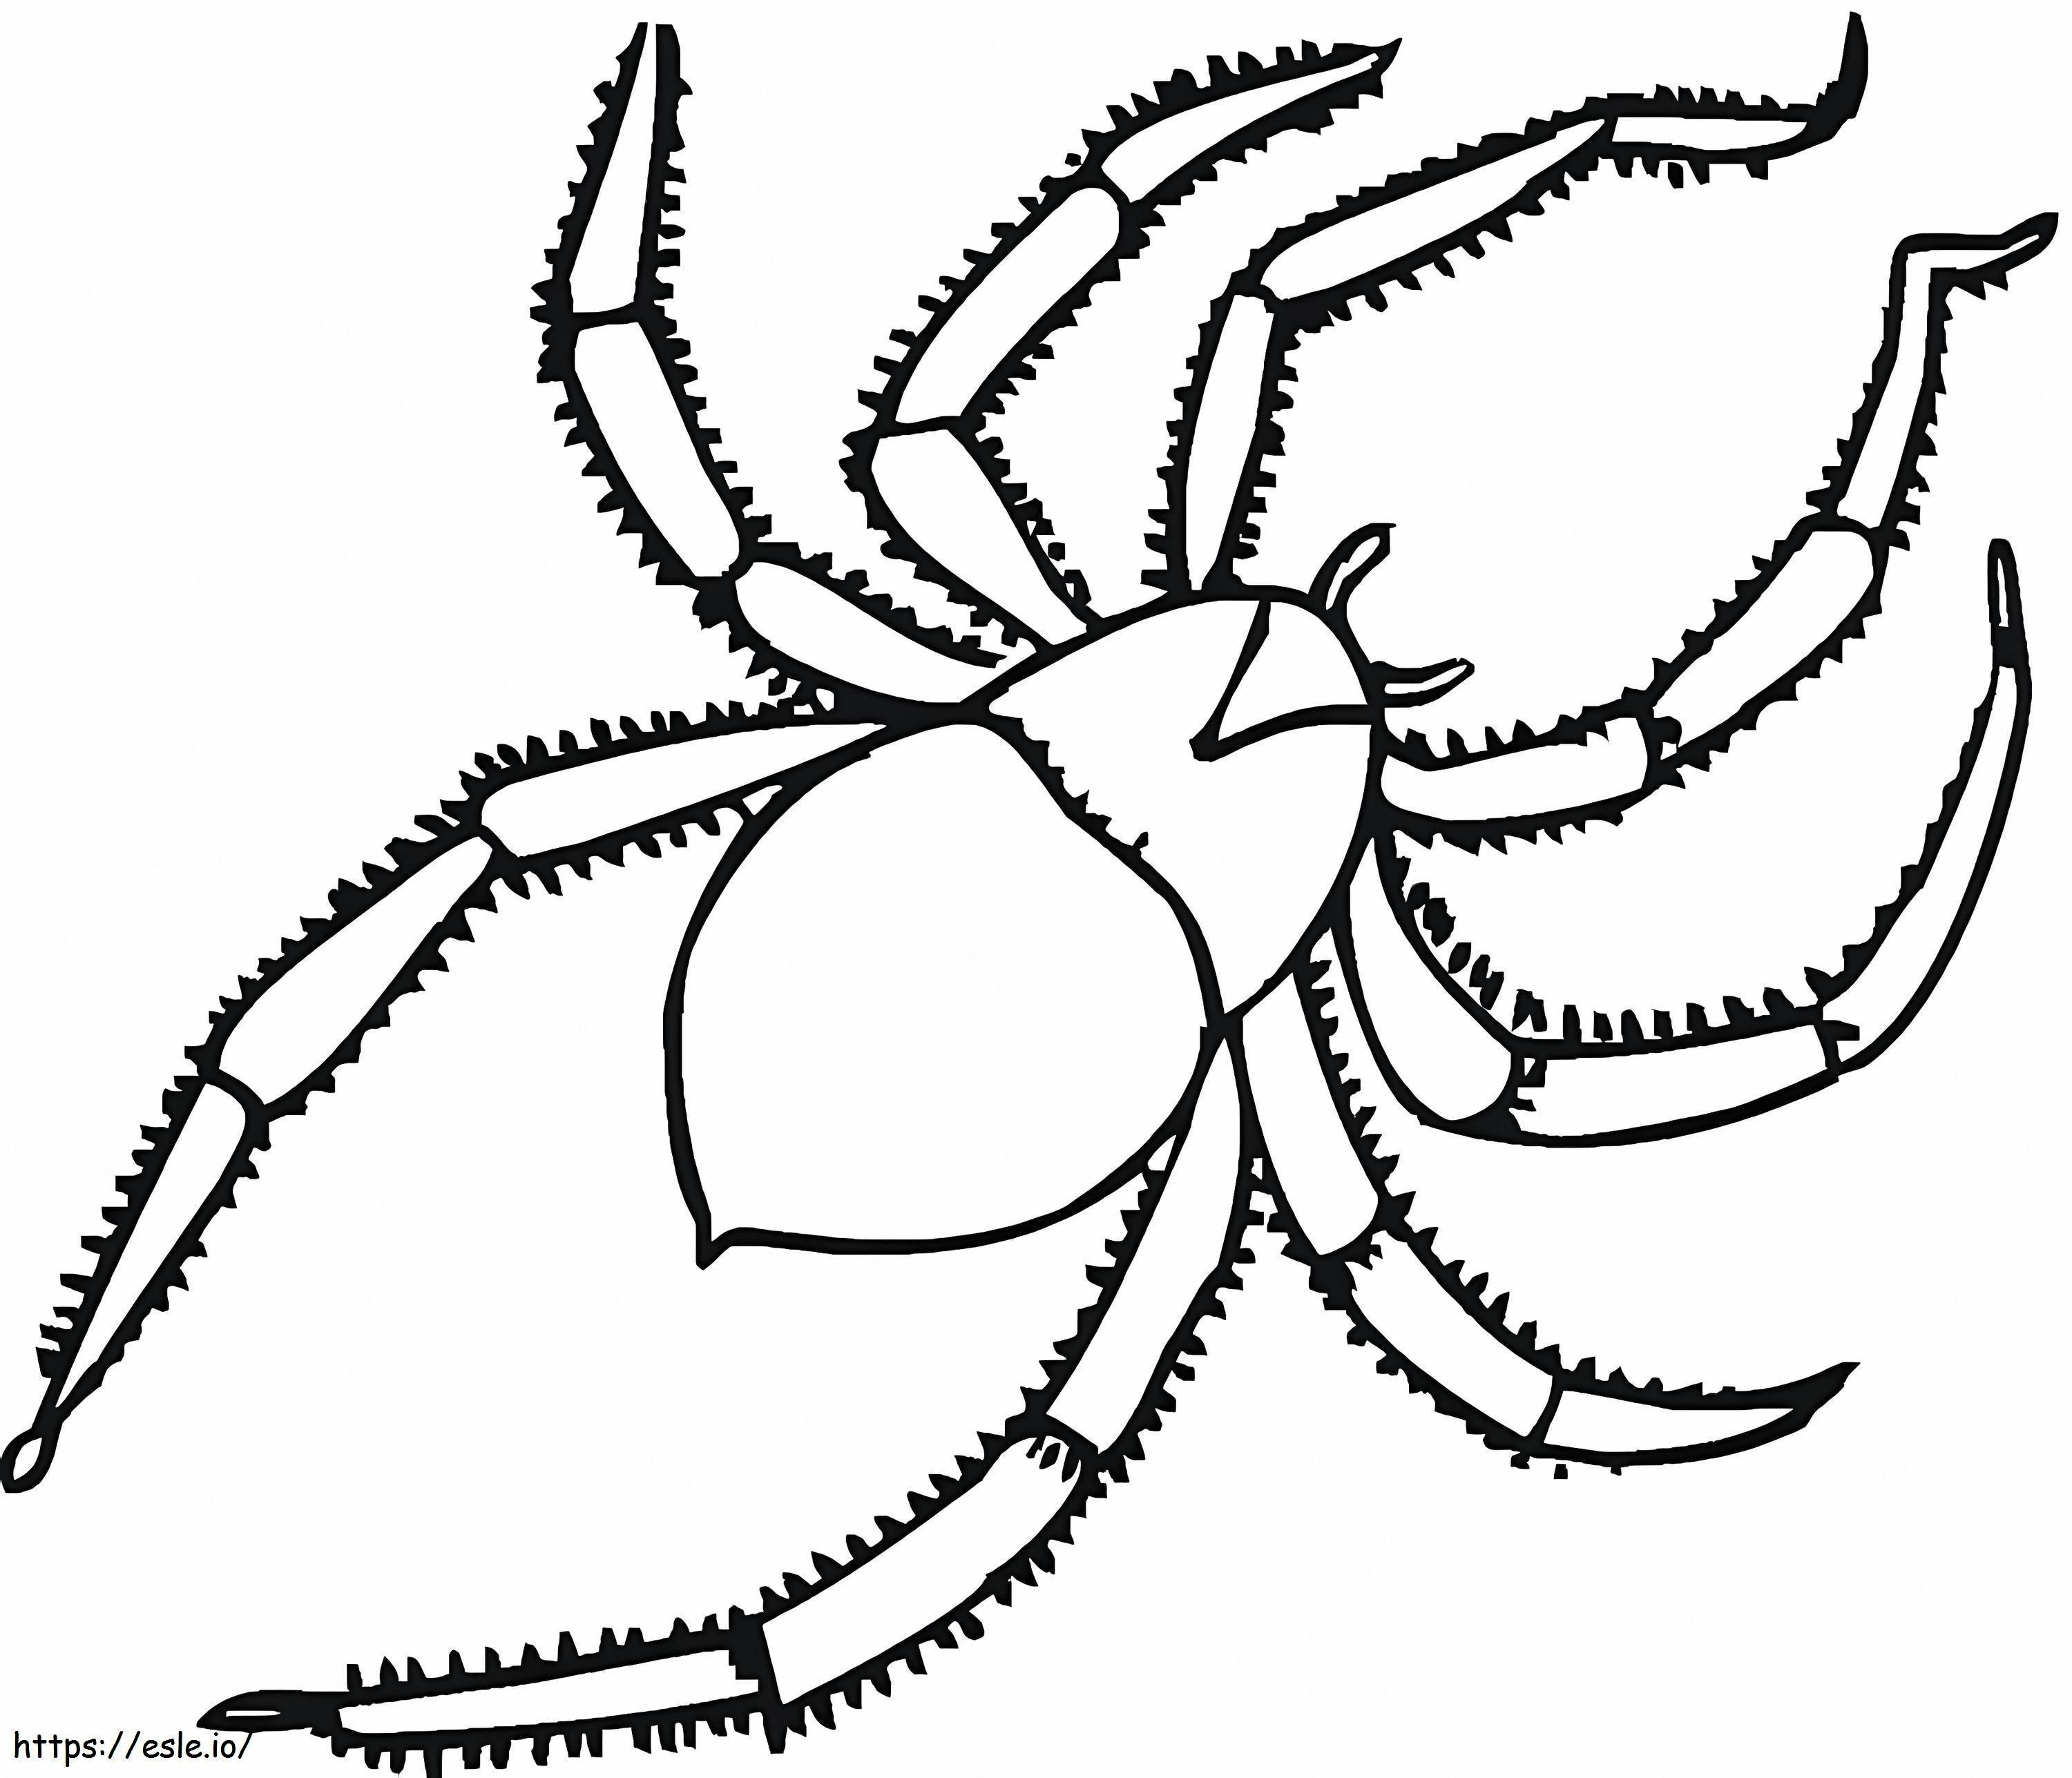 Un păianjen de colorat